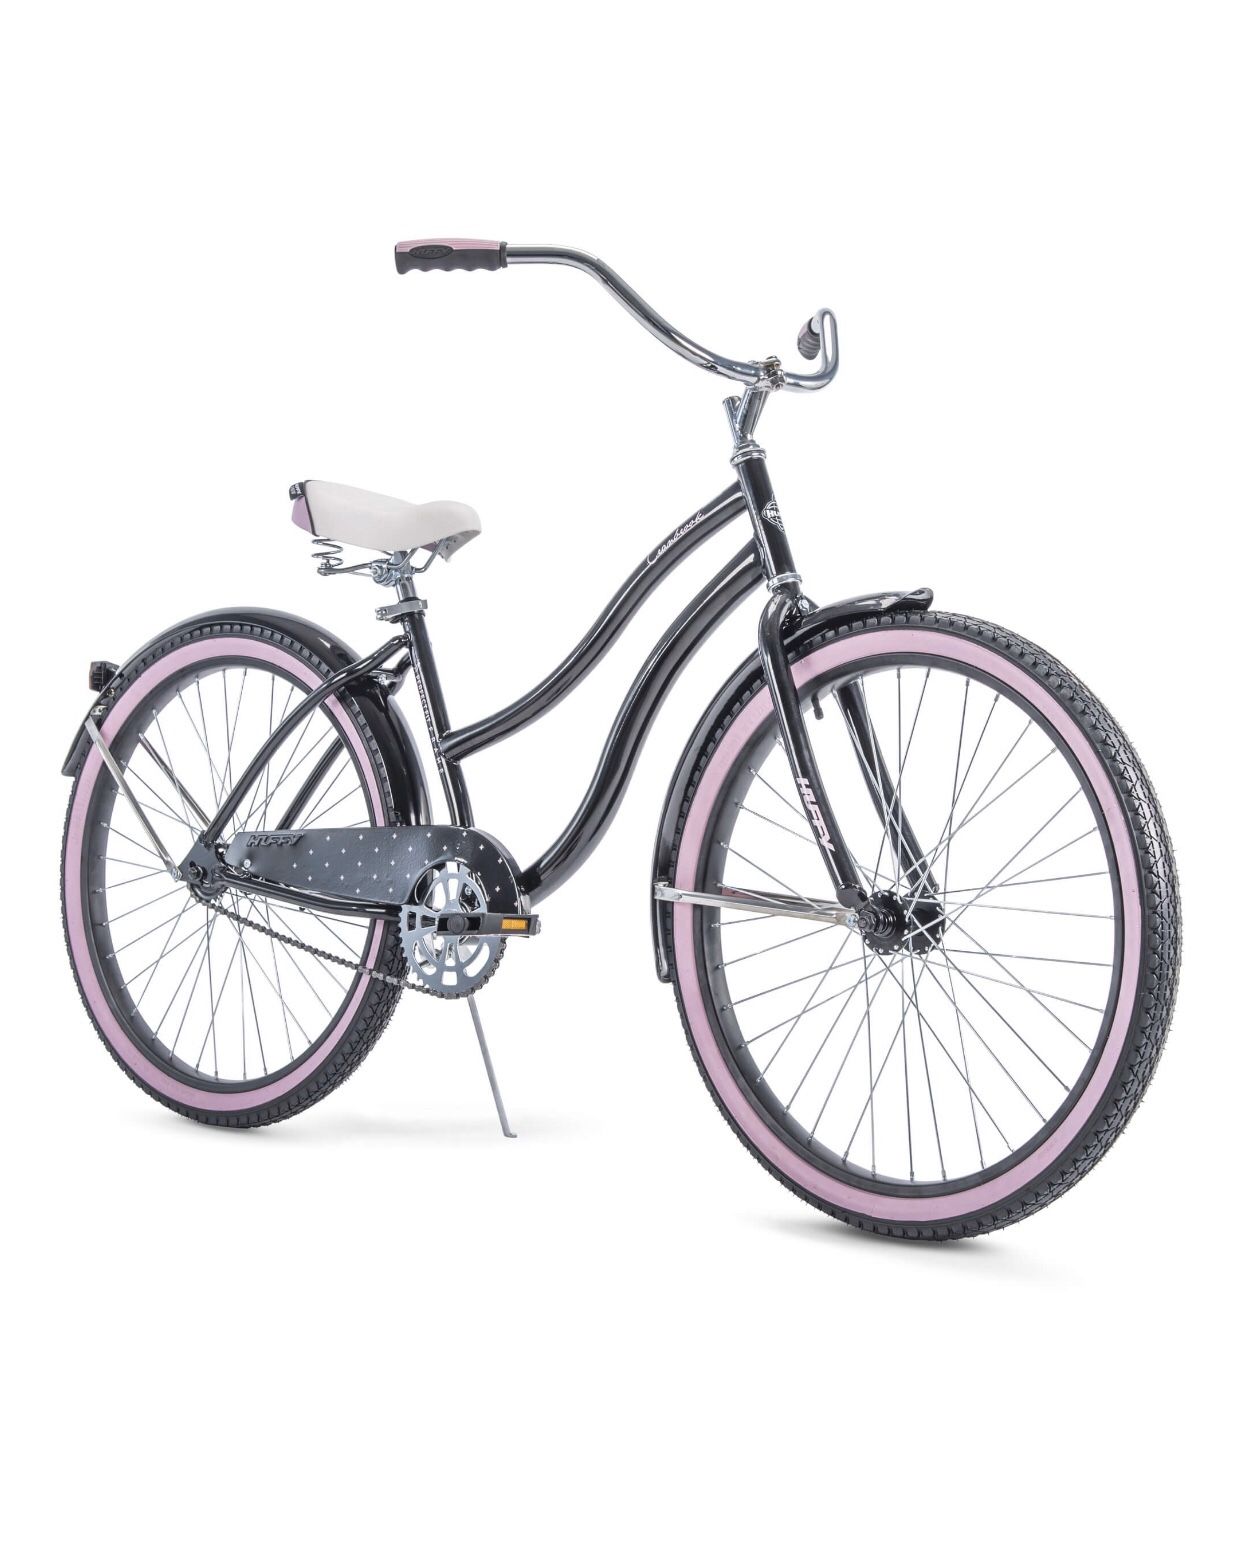 HUFFY Women’s Cruiser Bike 26 inch wheels Black & Pink BRAND NEW IN THE BOX